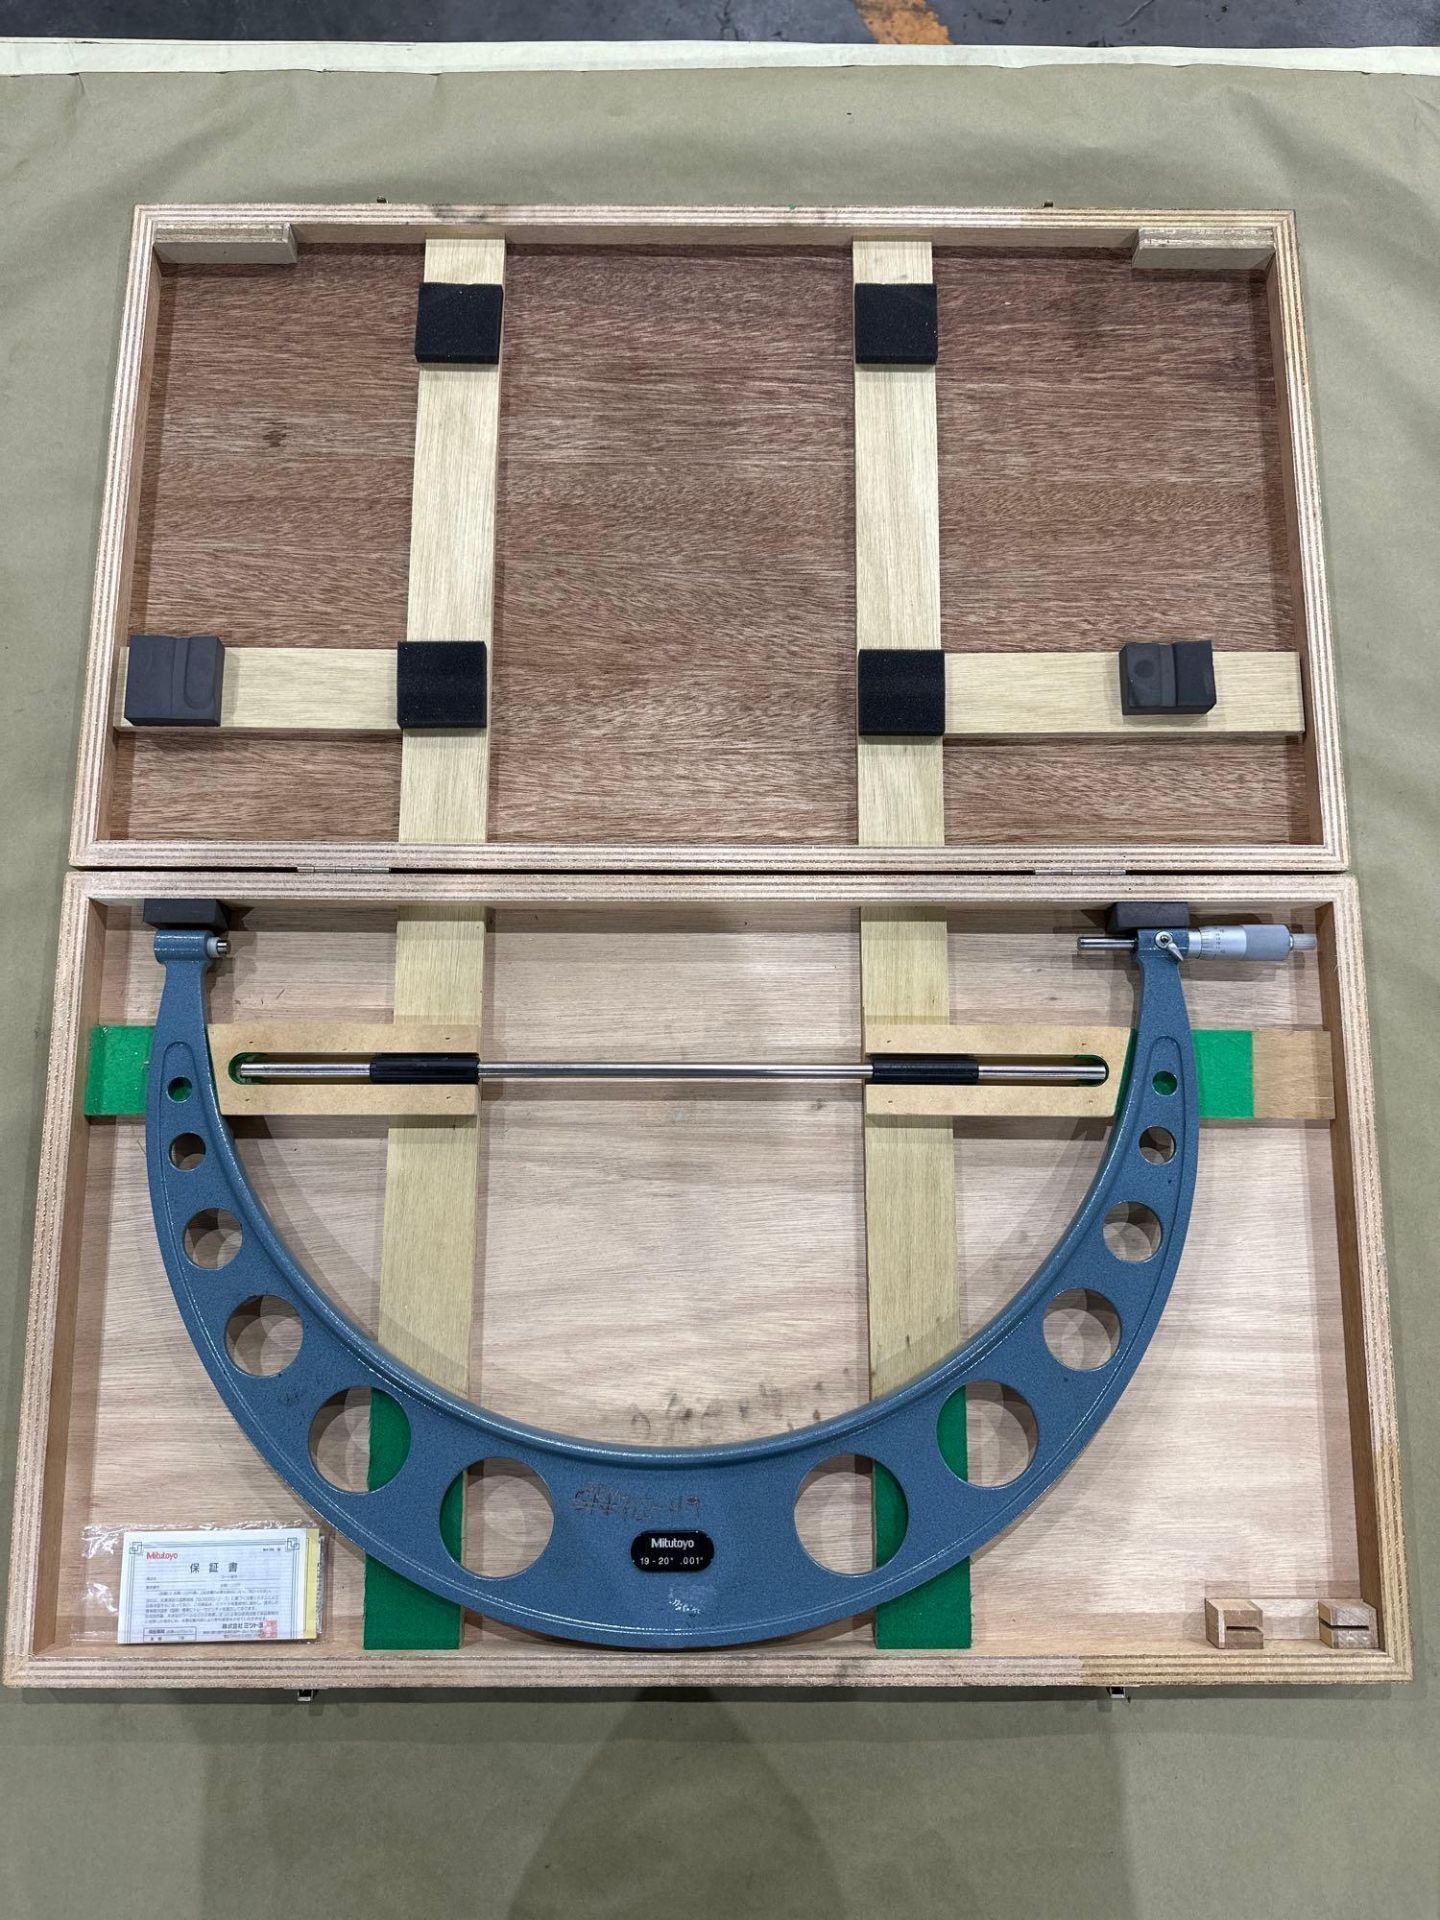 Mitutoyo Mechanical OD Micrometer No. 103-196, 19–20” Range, .001” Graduation, in wood case - Image 3 of 8